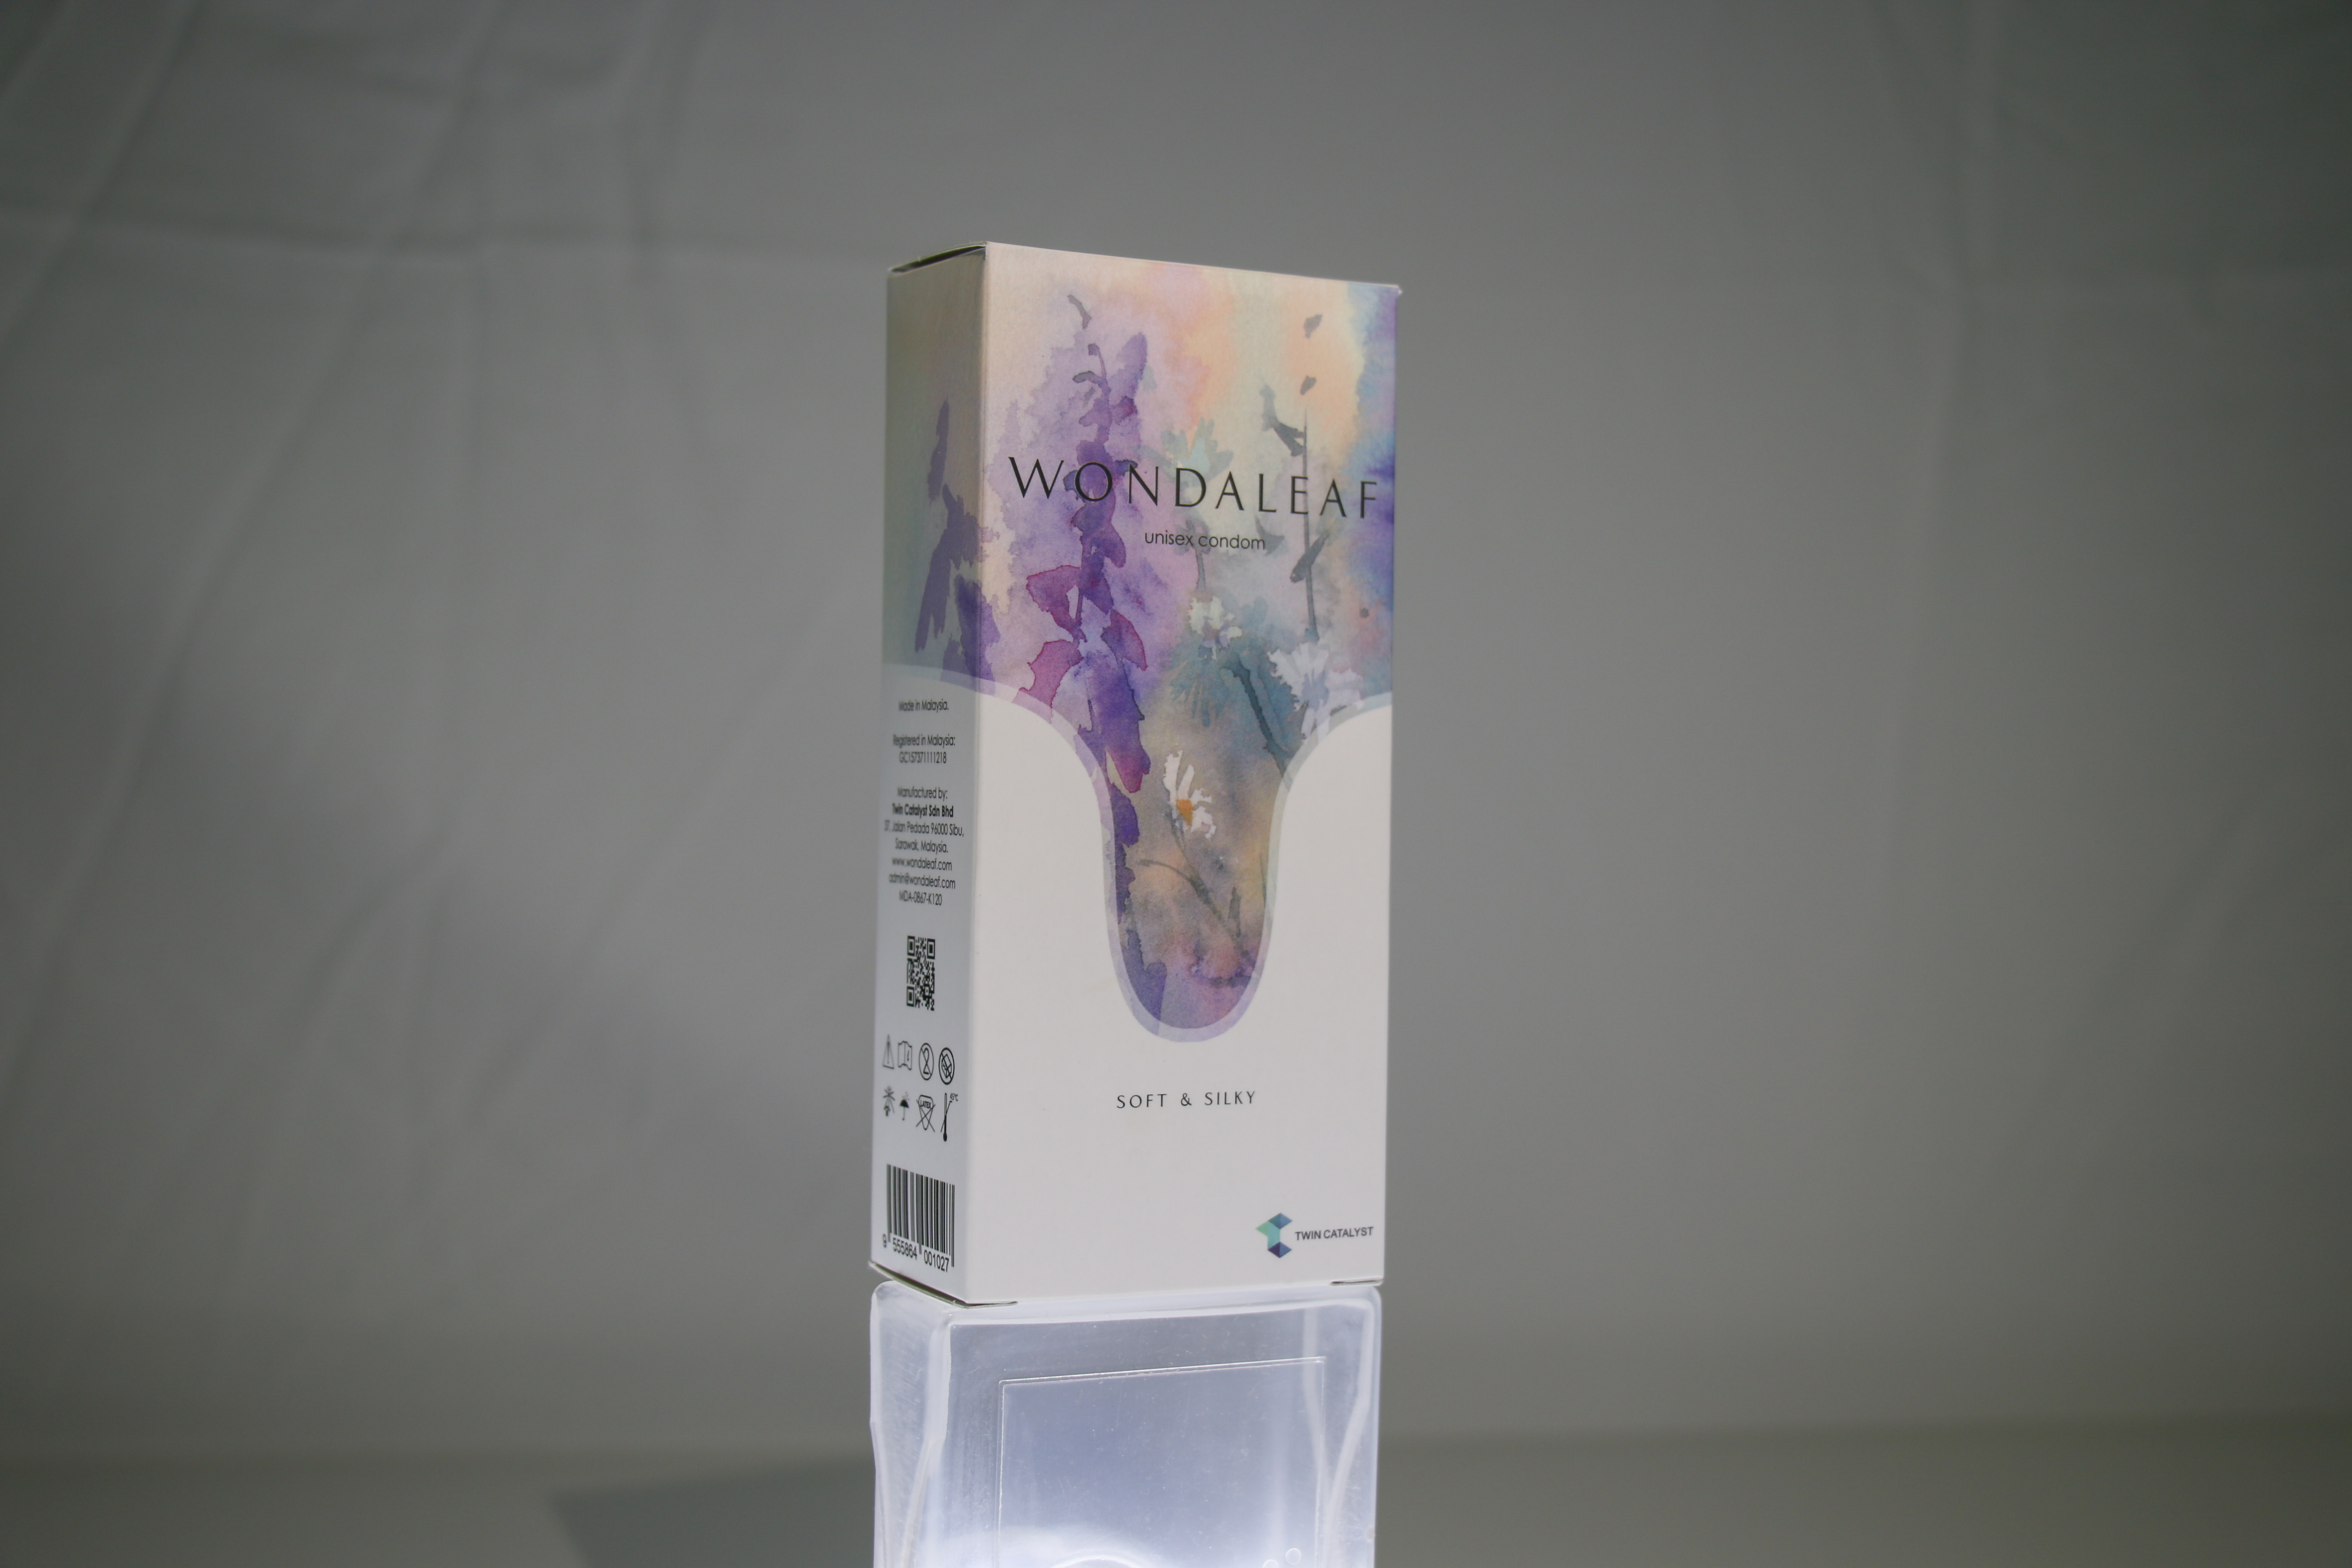 Box of Wondaleaf Unisex Condom is pictured at fatory in Sibu